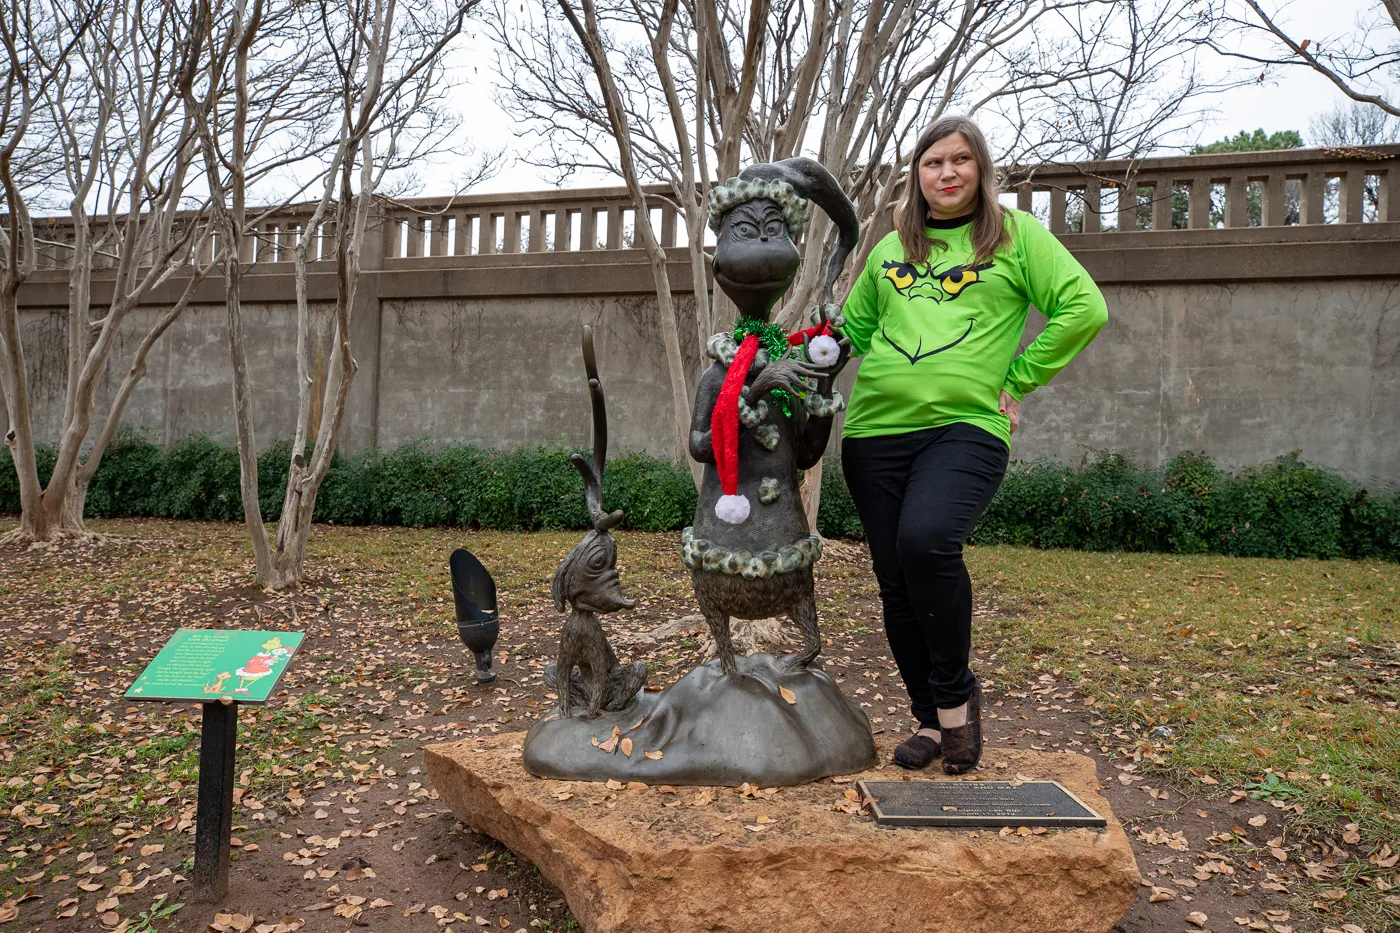 How the Grinch Stole Christmas statue at Dr. Seuss Park in Abilene, Texas (Everman Park)